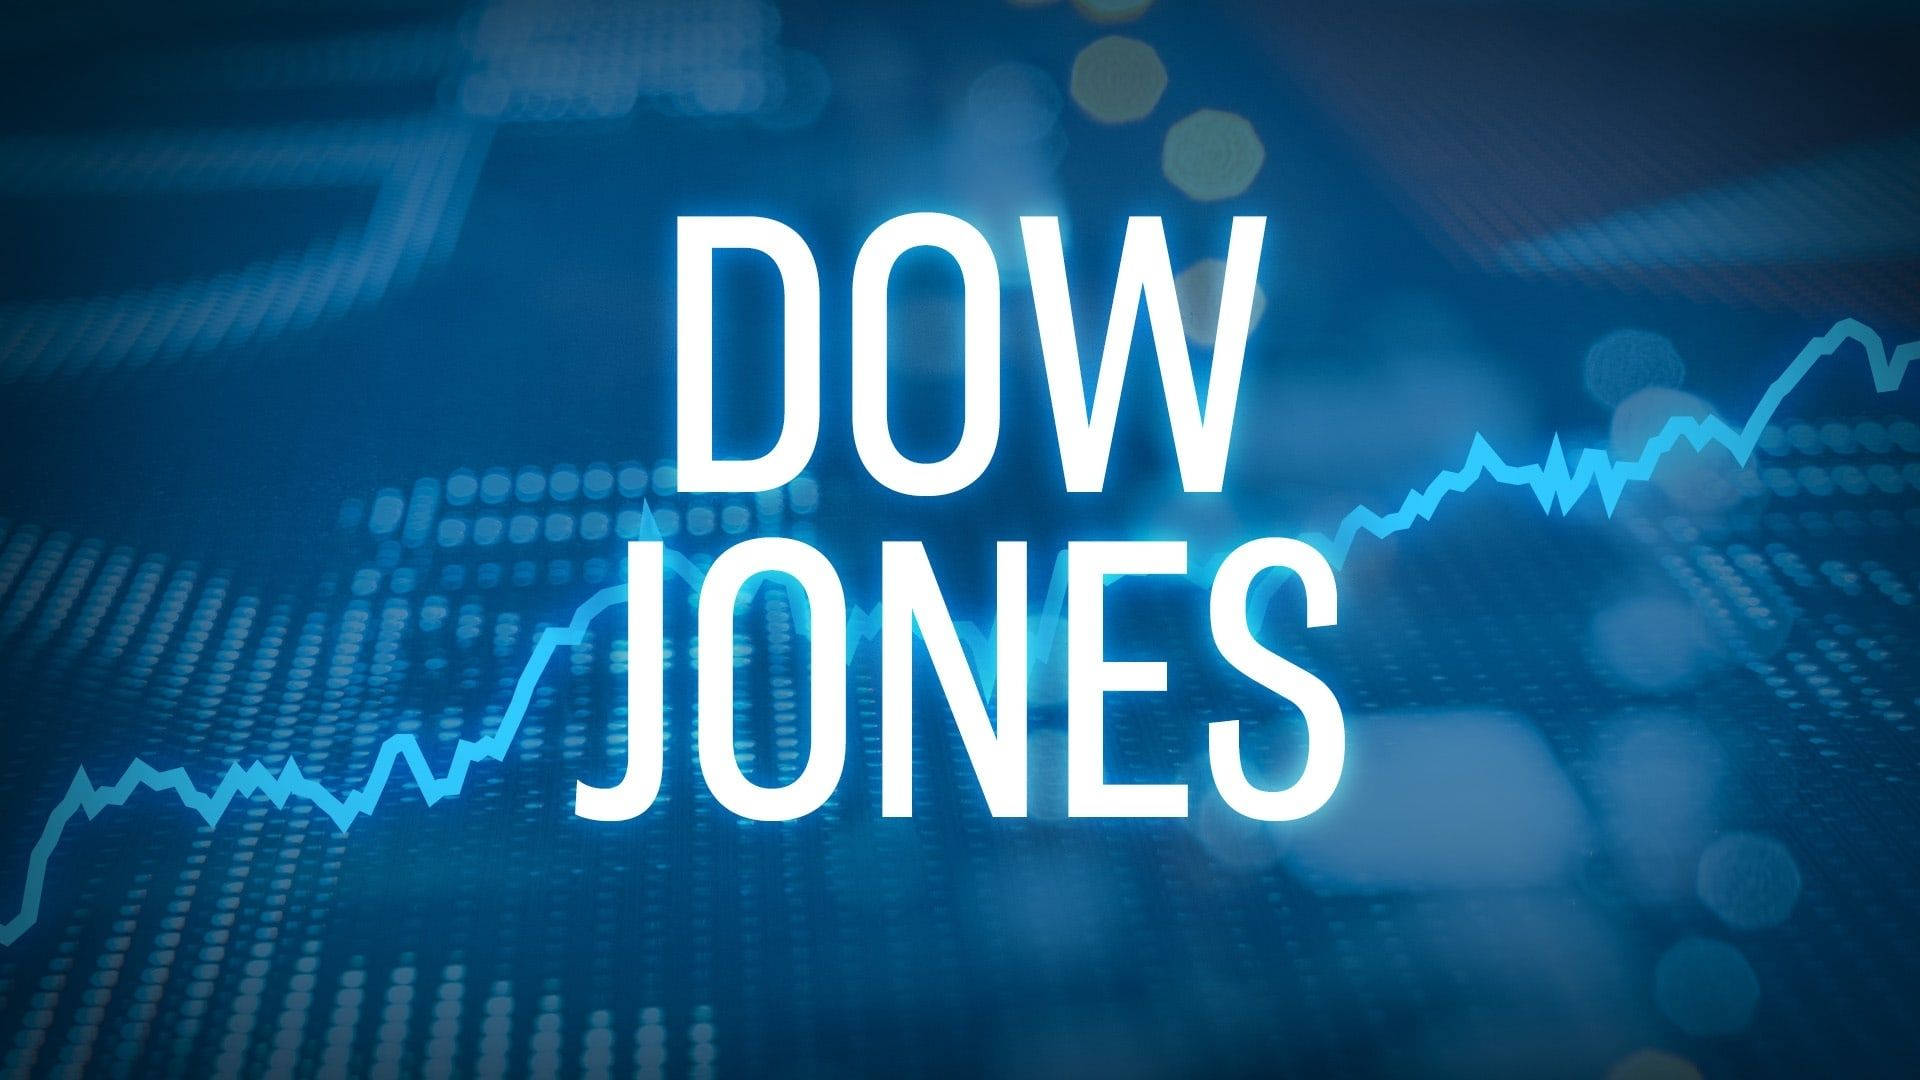 Dow Jones Company Name